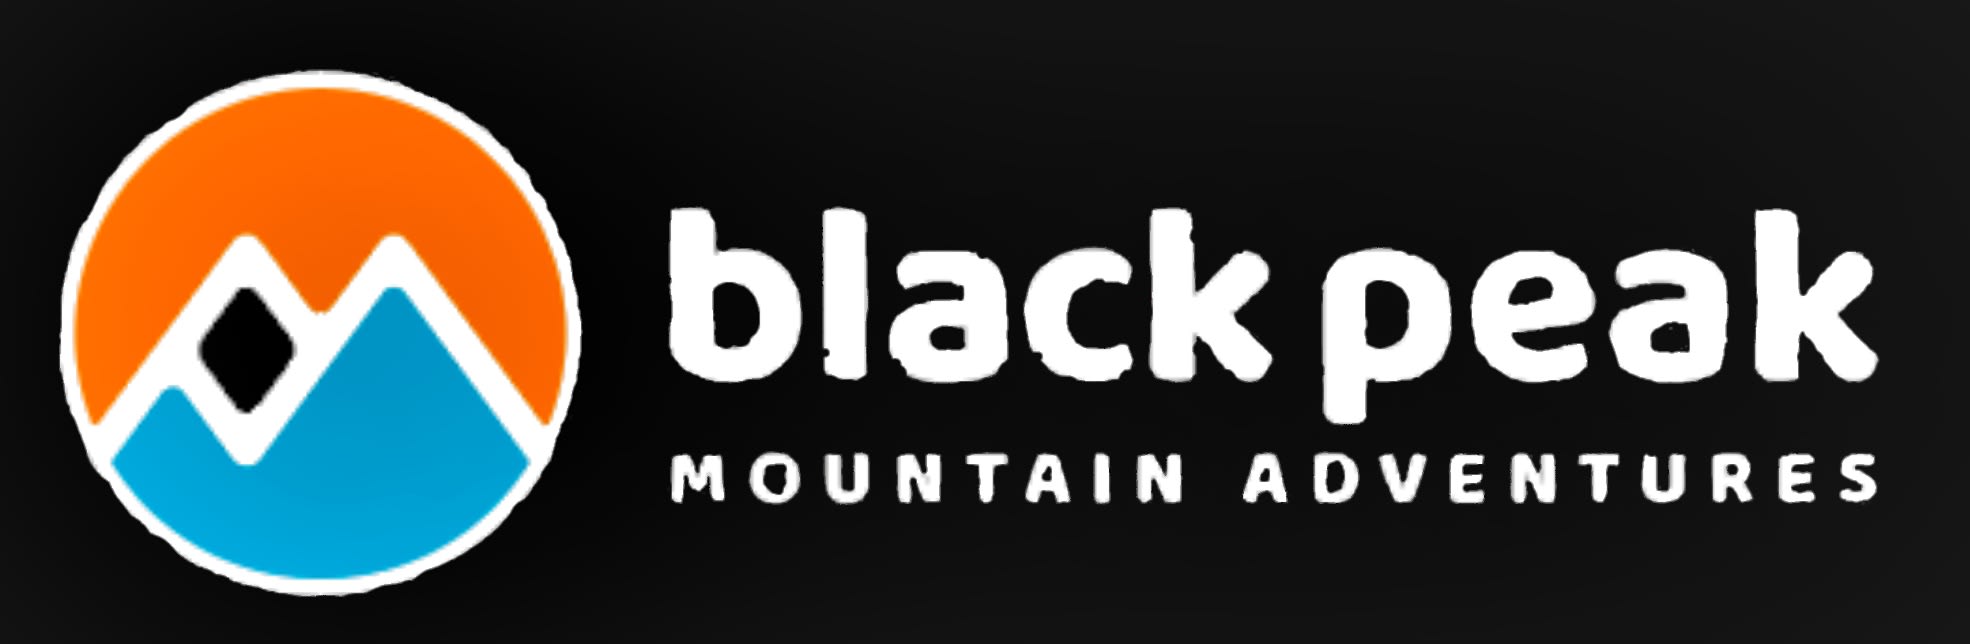 Black Peak Mountain Adventures